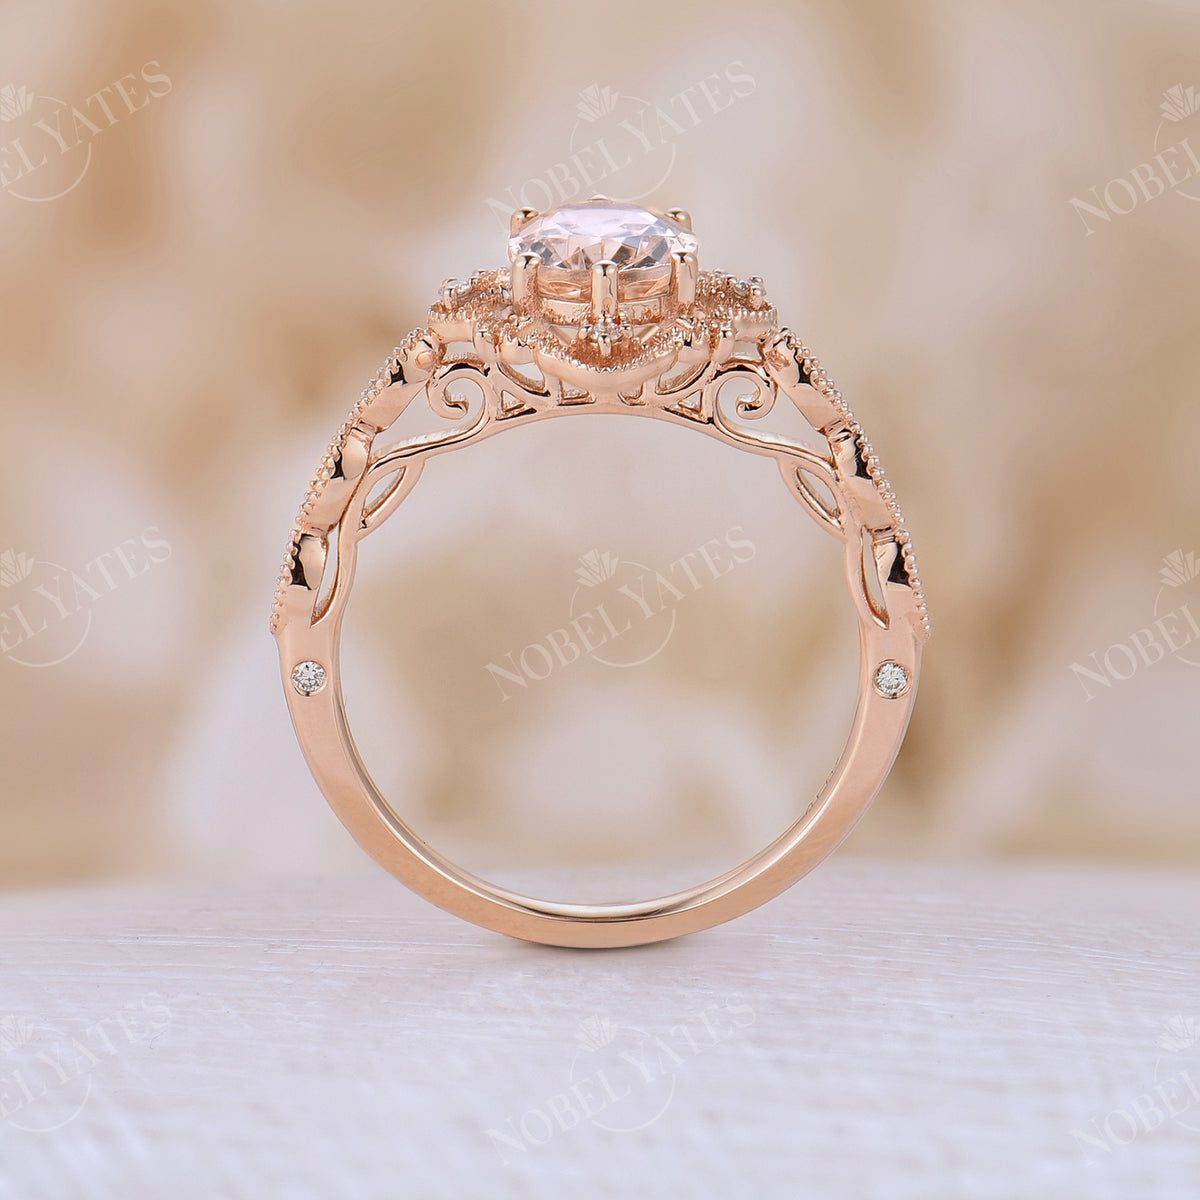 Vintage Orange Pink Morganite Engagement Ring Milgrain Rose Gold